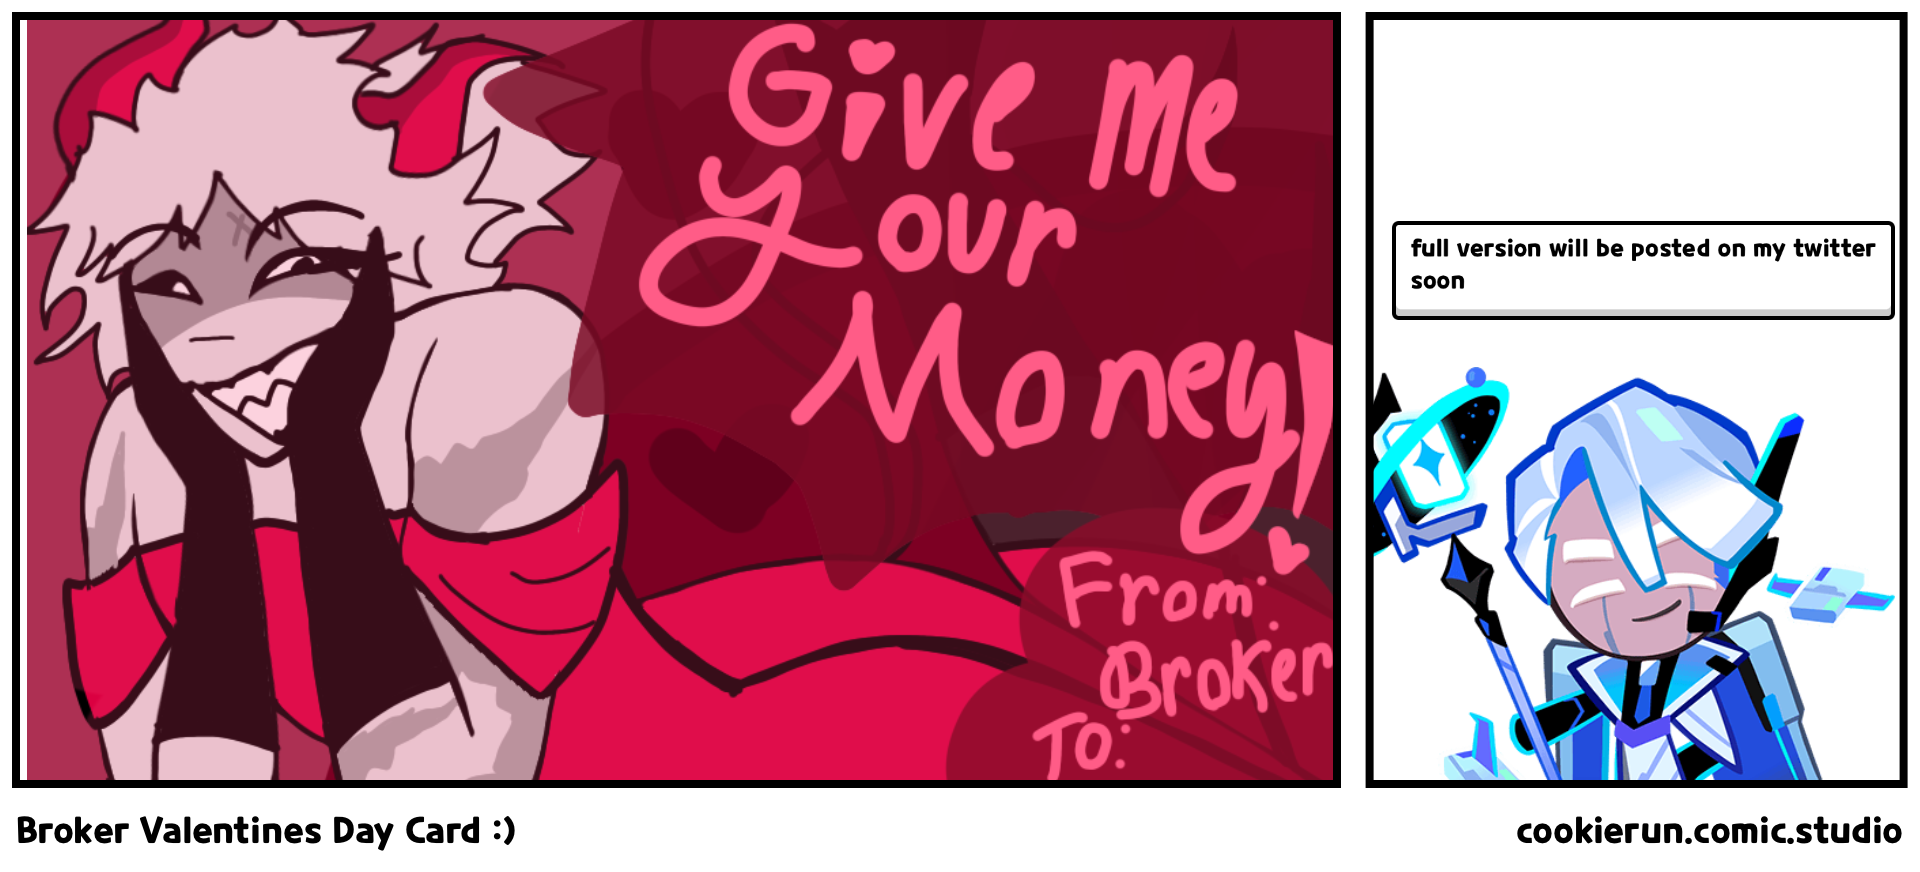 Broker Valentines Day Card :)